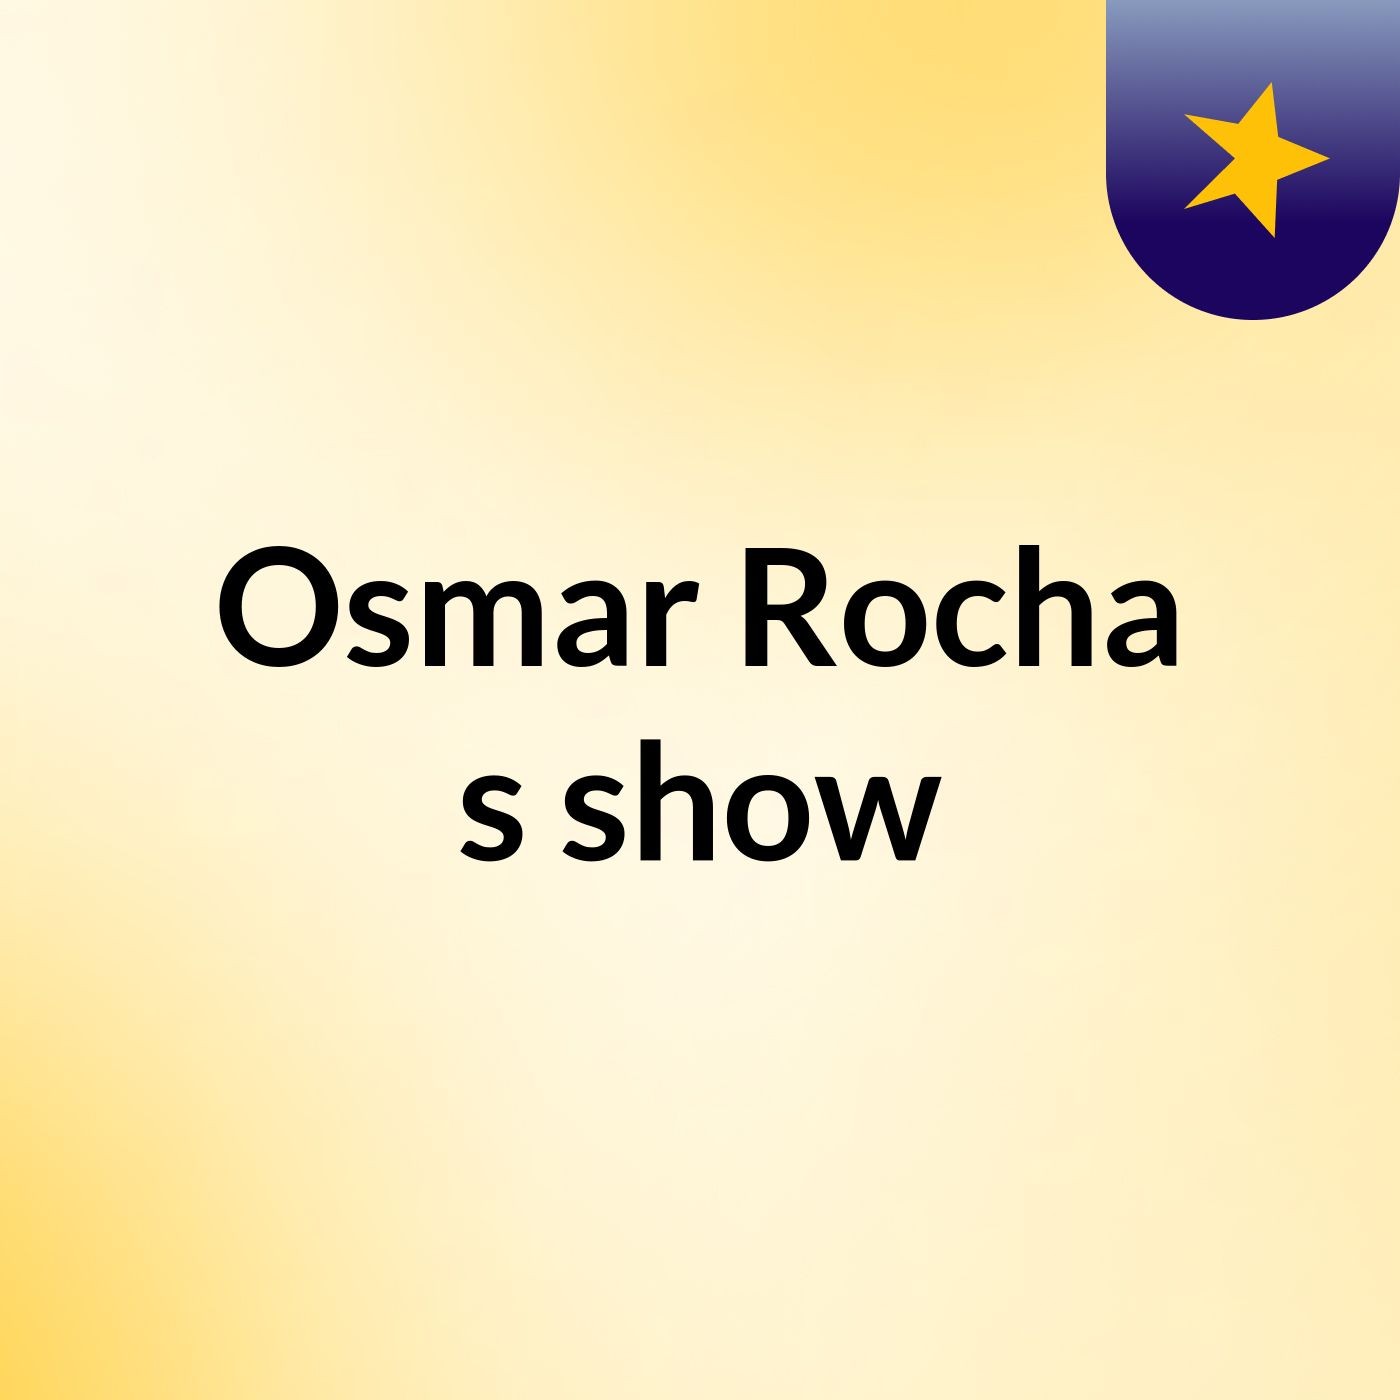 Osmar Rocha's show